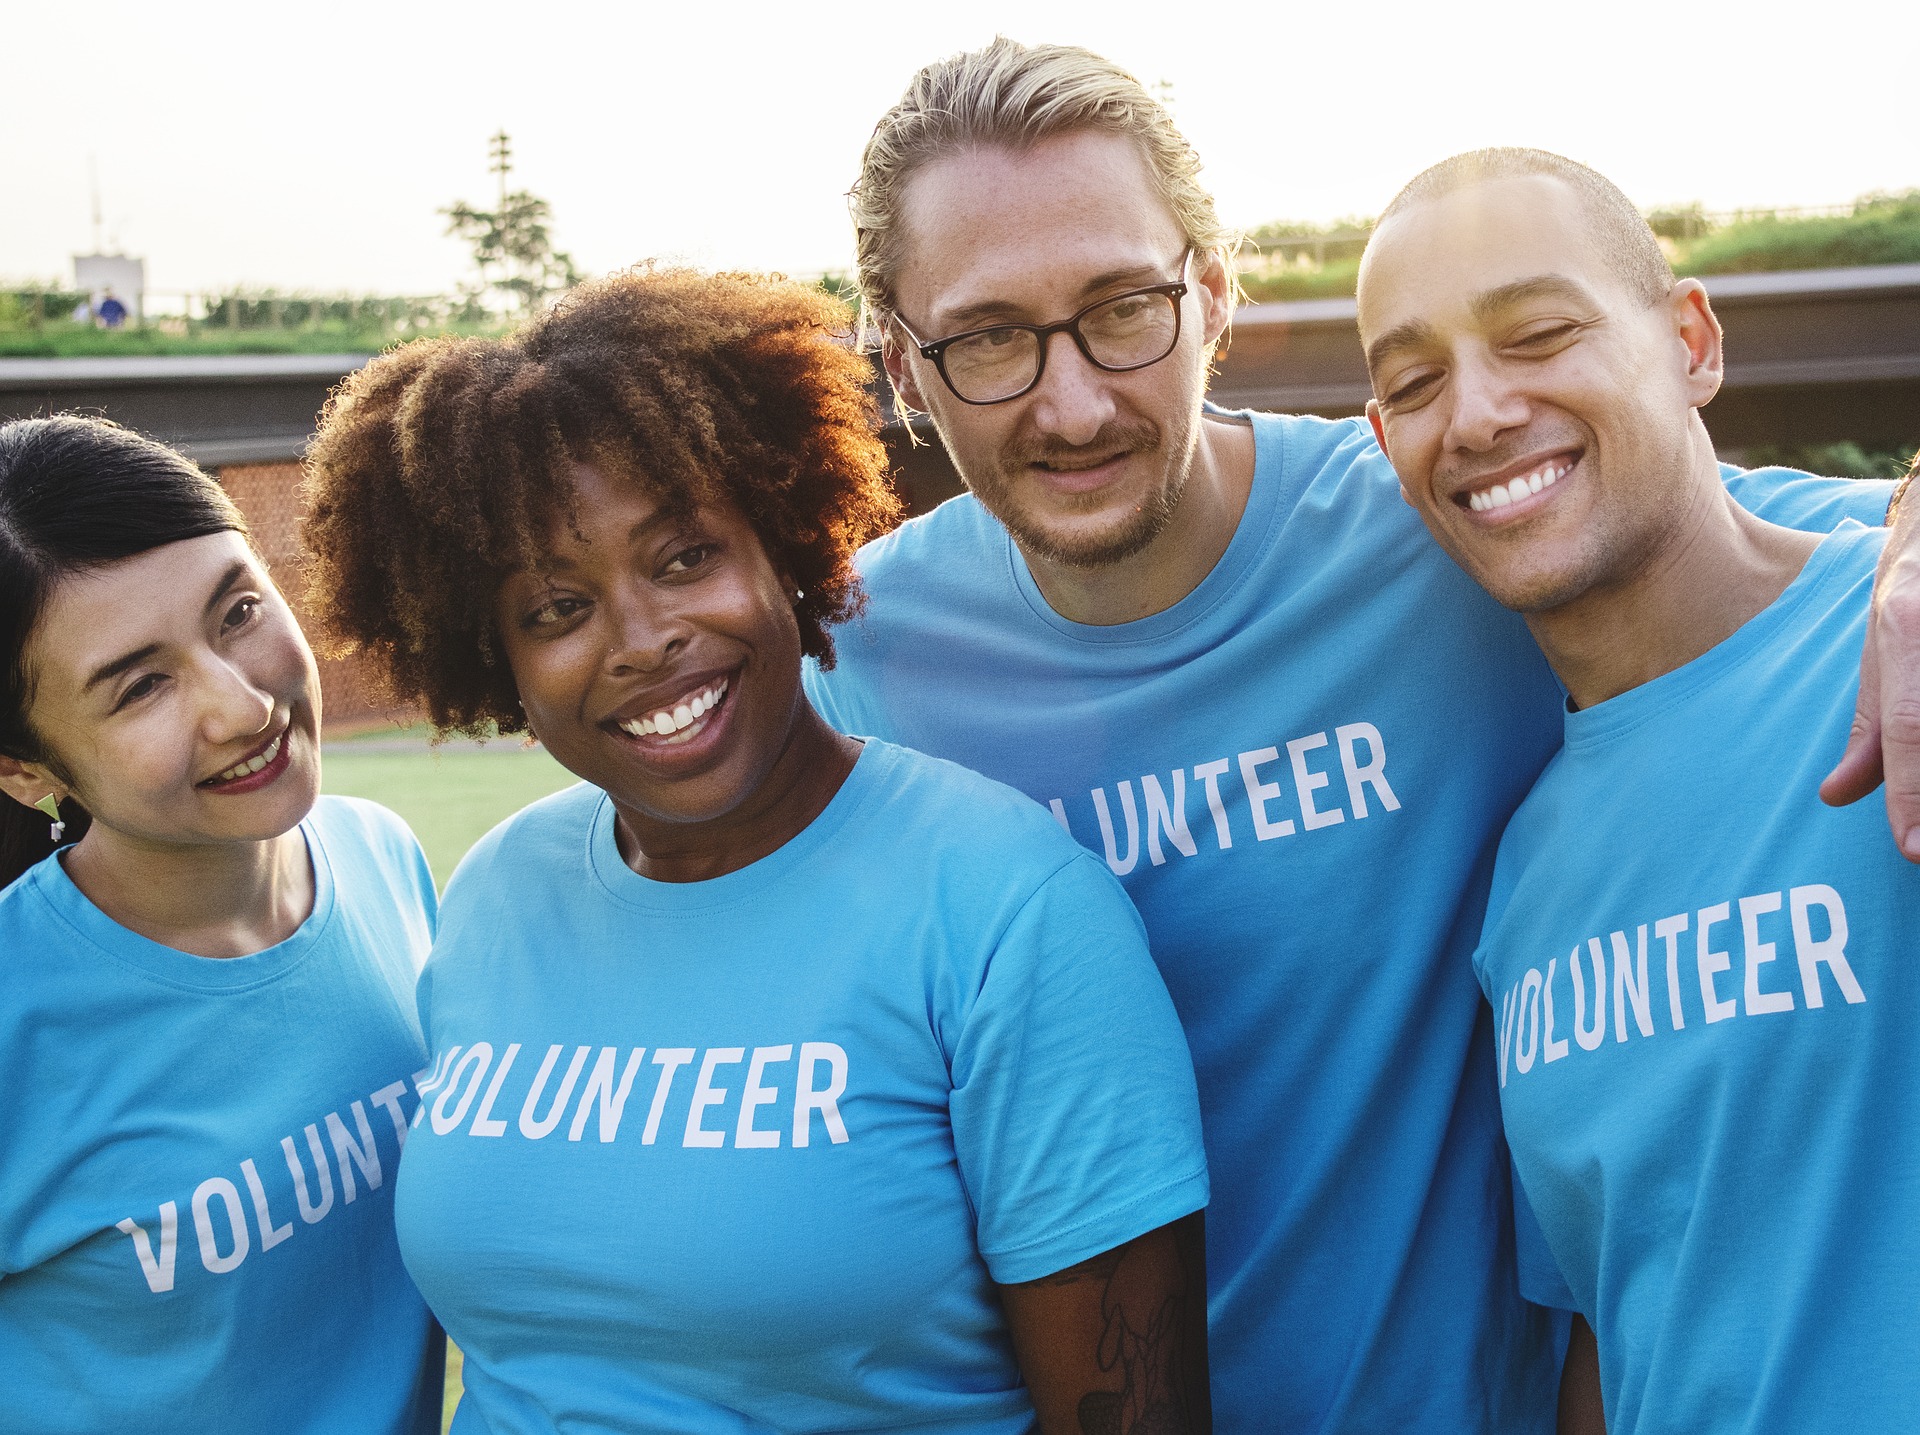 Volunteering Time Off, Part 1 | CA Benefits Agency